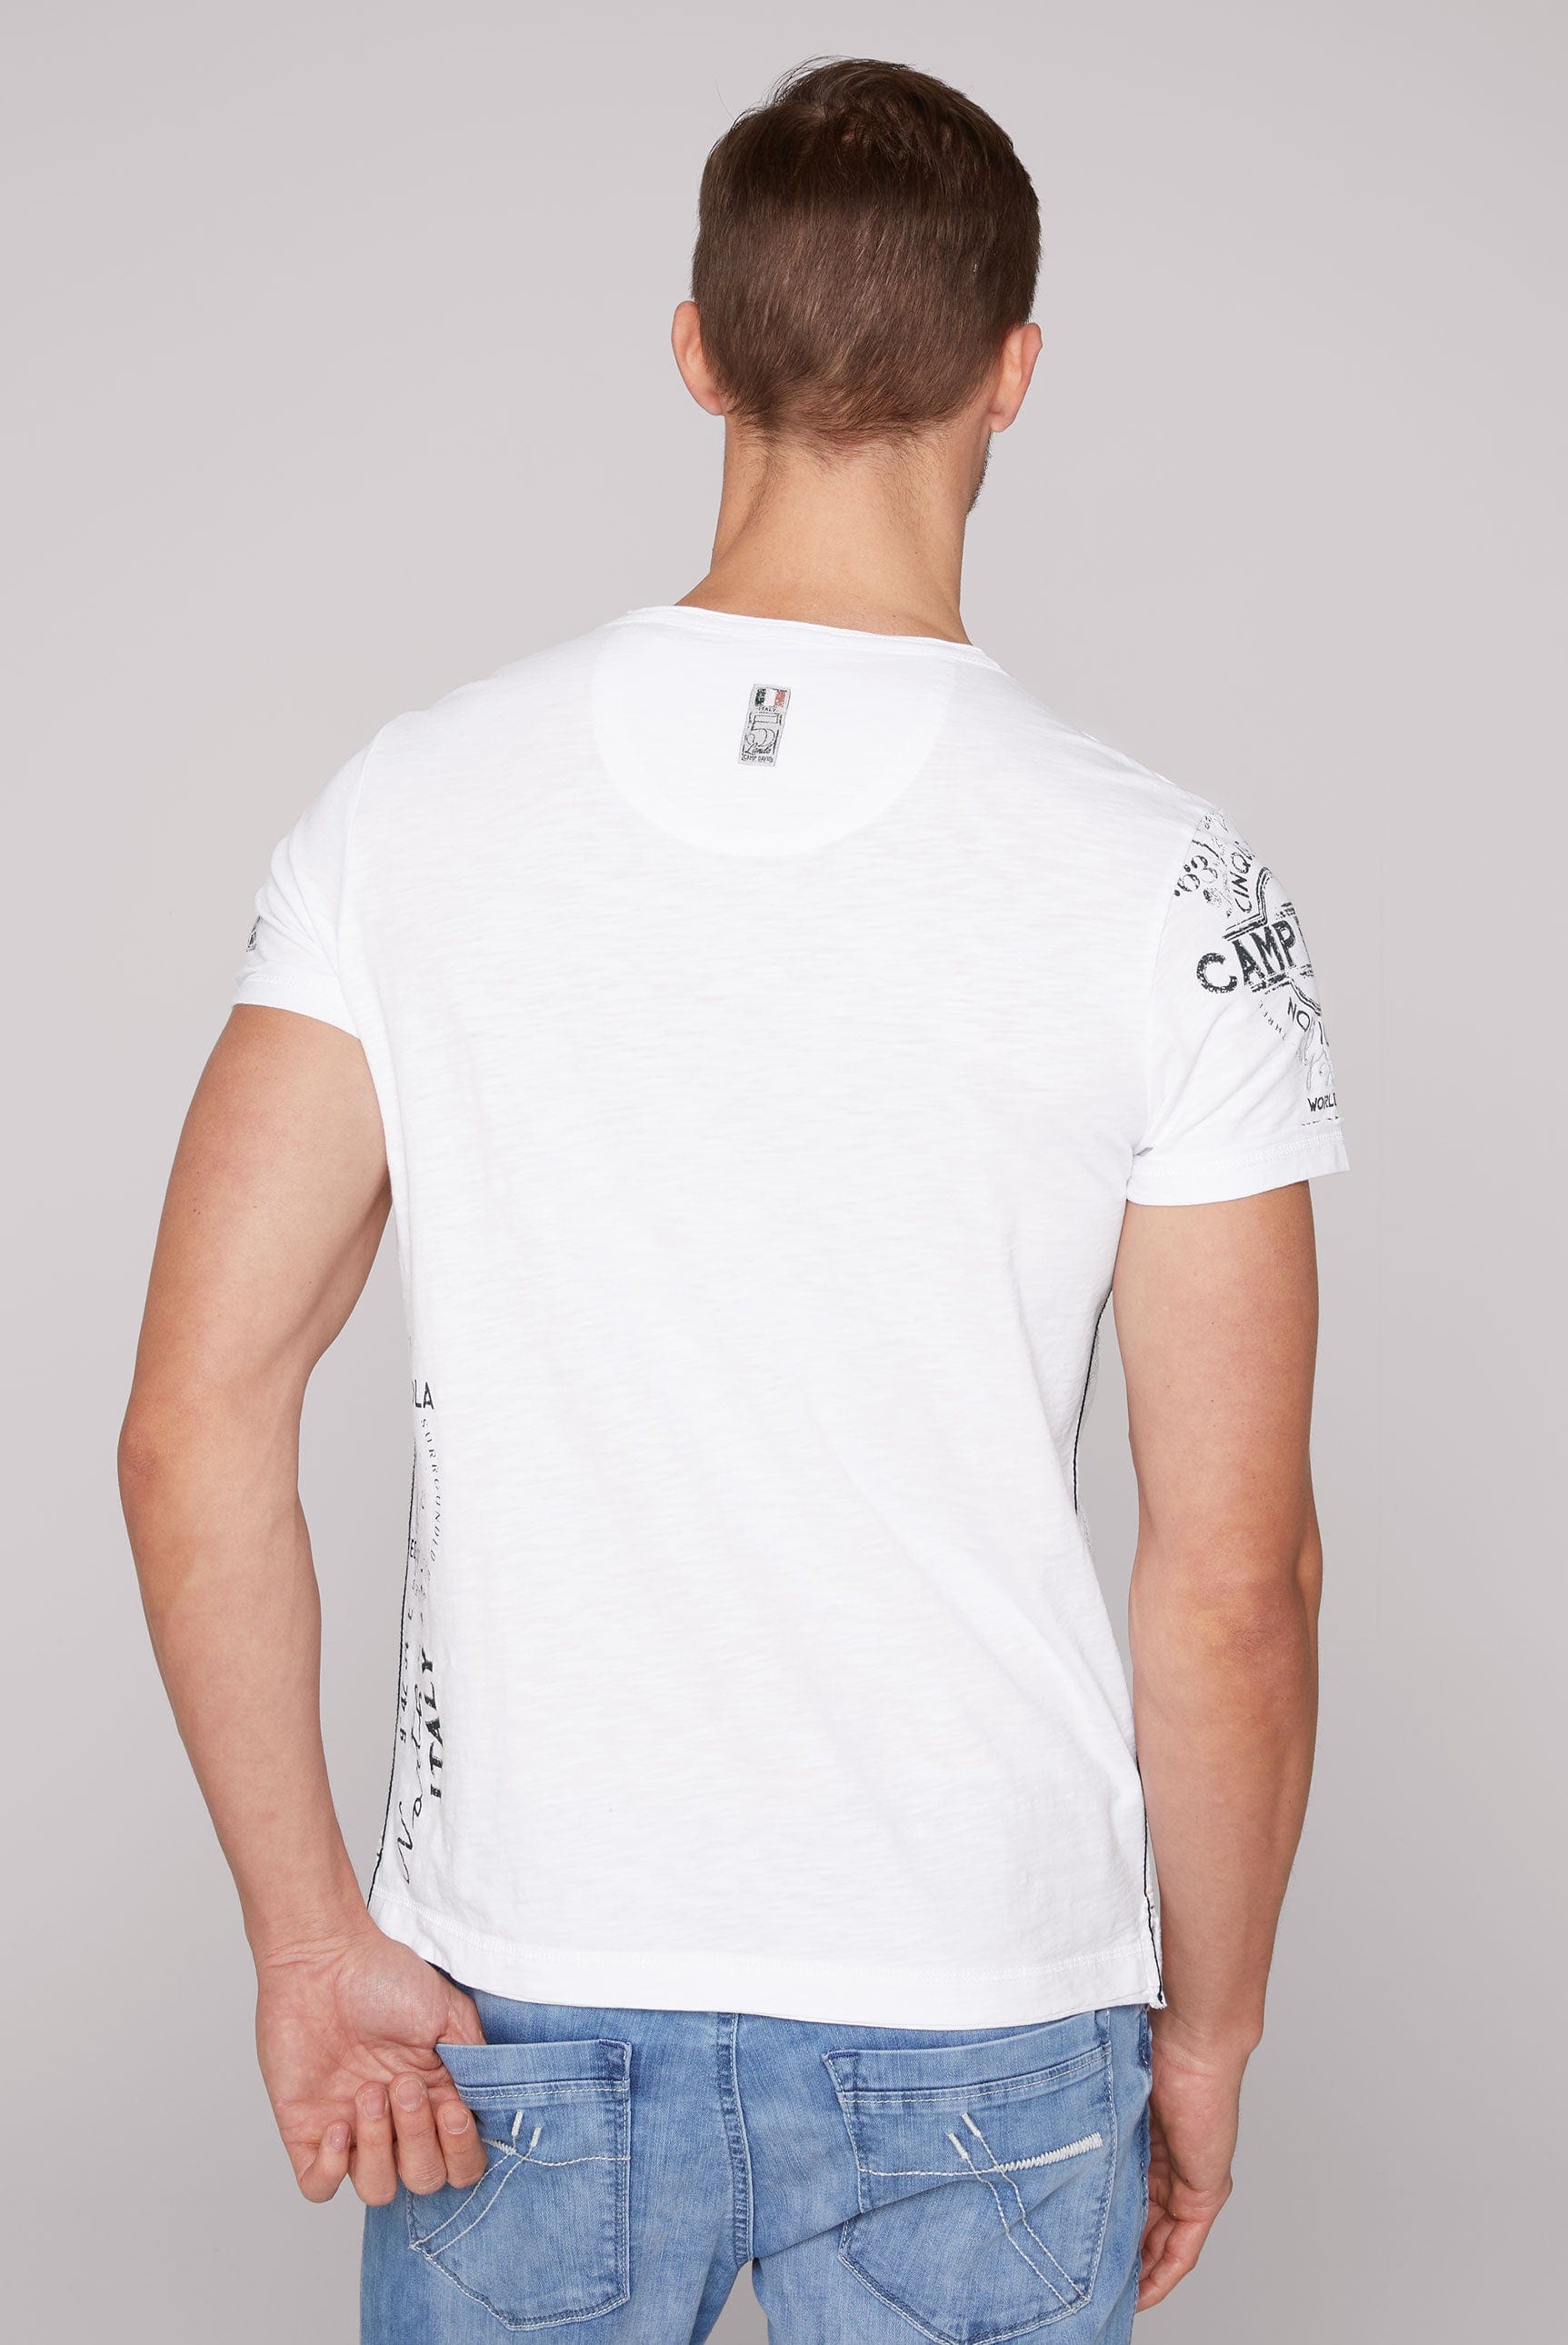 Camp David T-Shirt, button v-neck Chique Terre, optic white